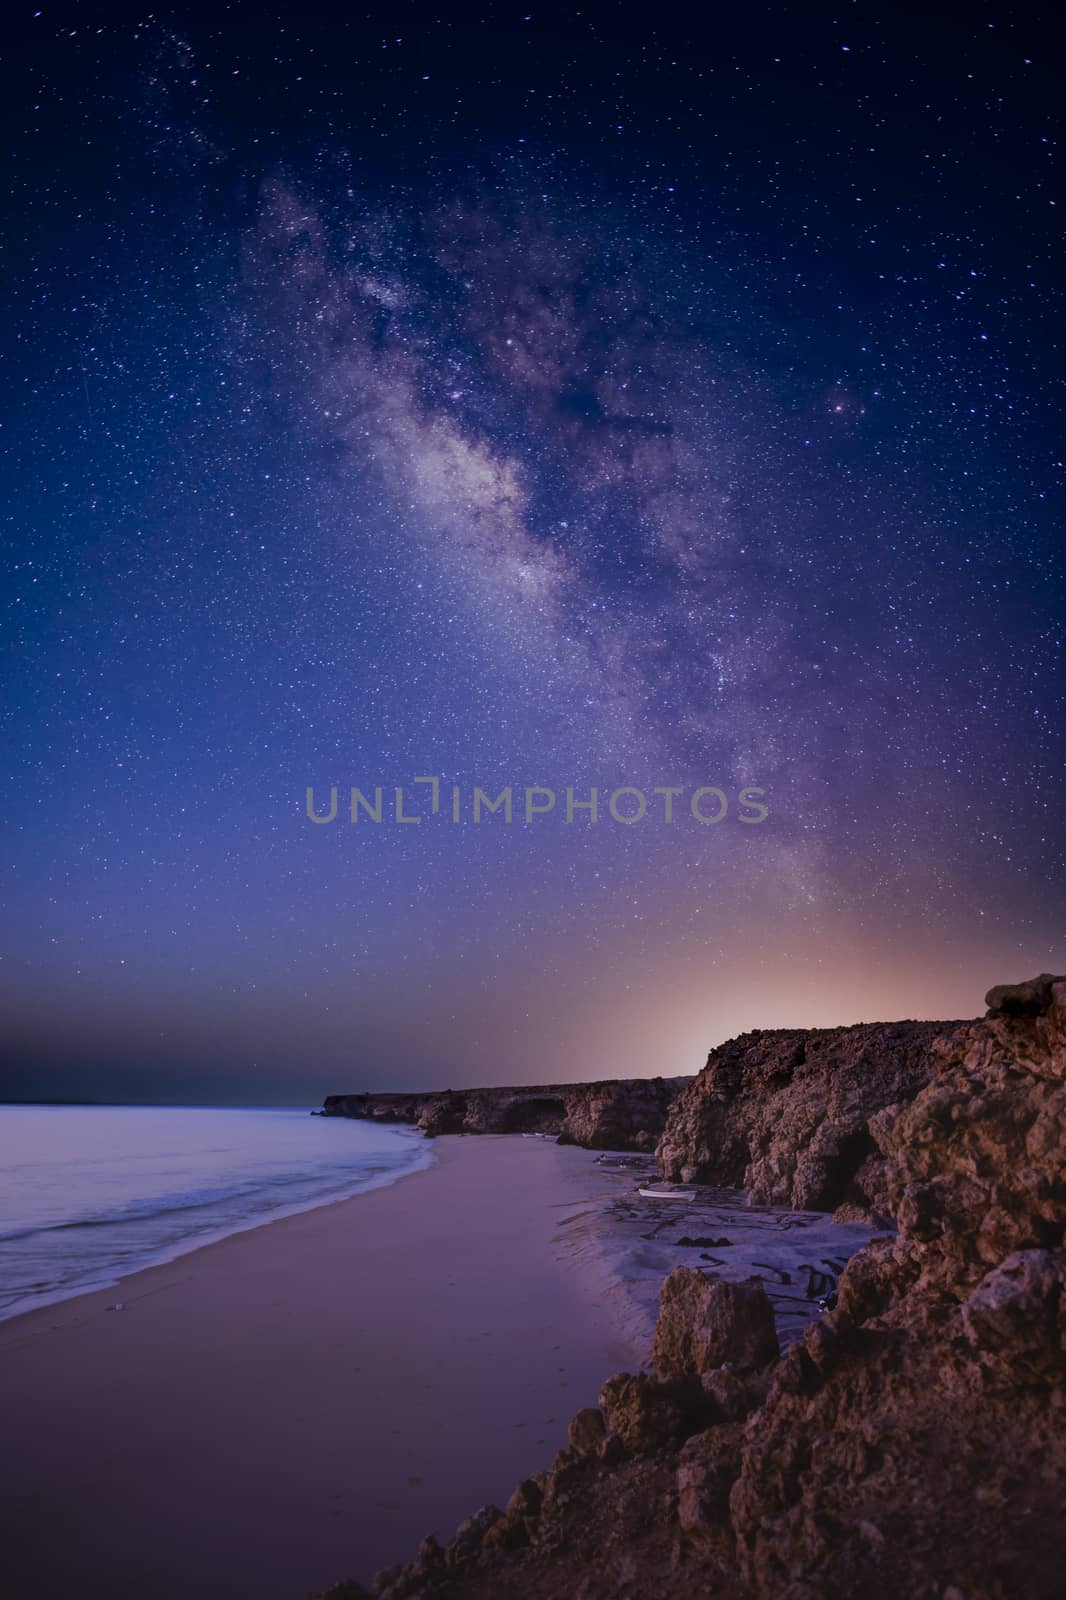 Milky Way above a wild beach and the ocean, Ras Al Jinz, Oman by GABIS